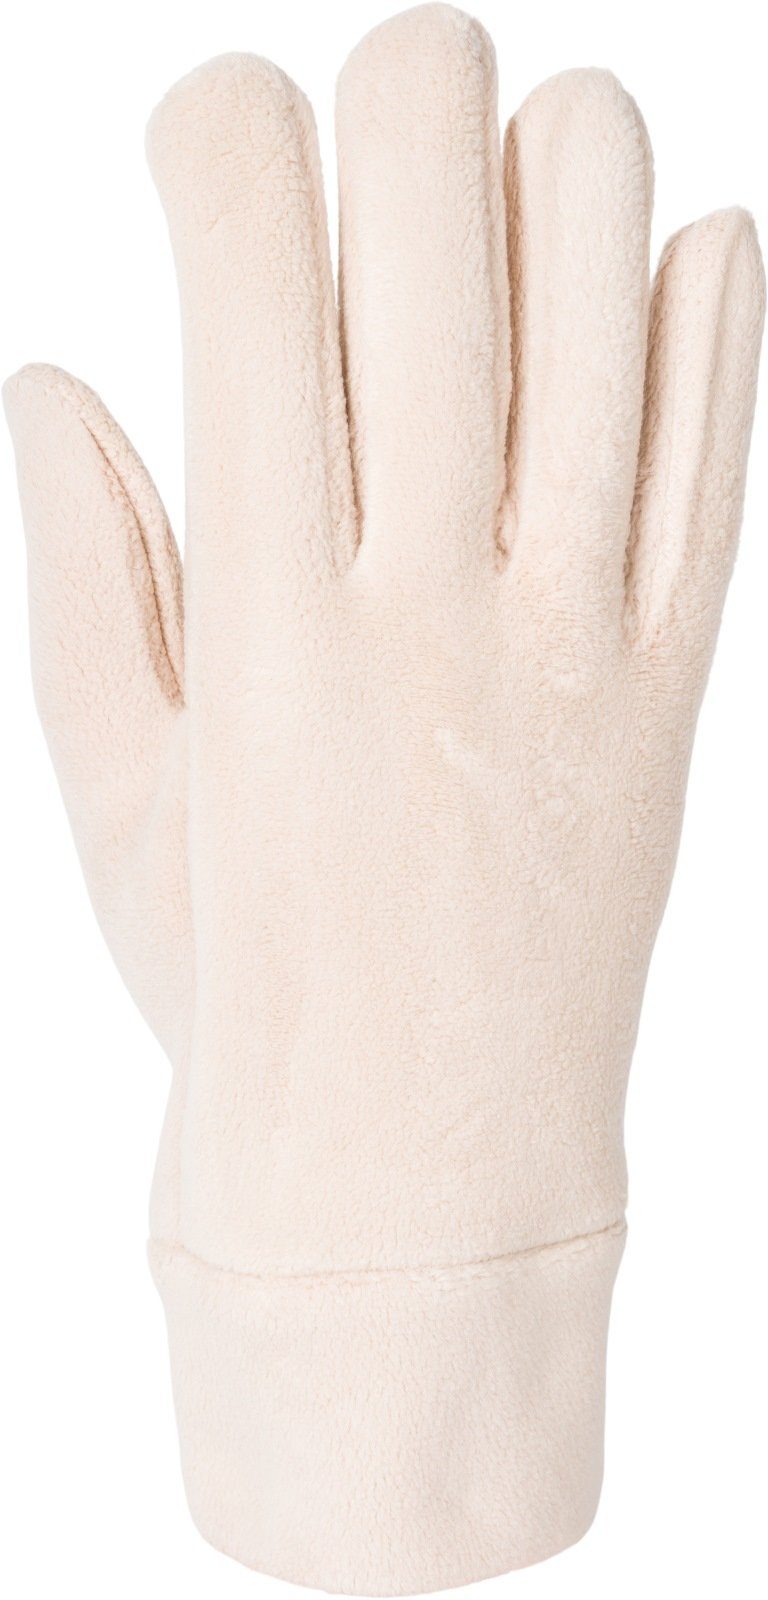 styleBREAKER Fleecehandschuhe Einfarbige Fleece Handschuhe Beige Touchscreen